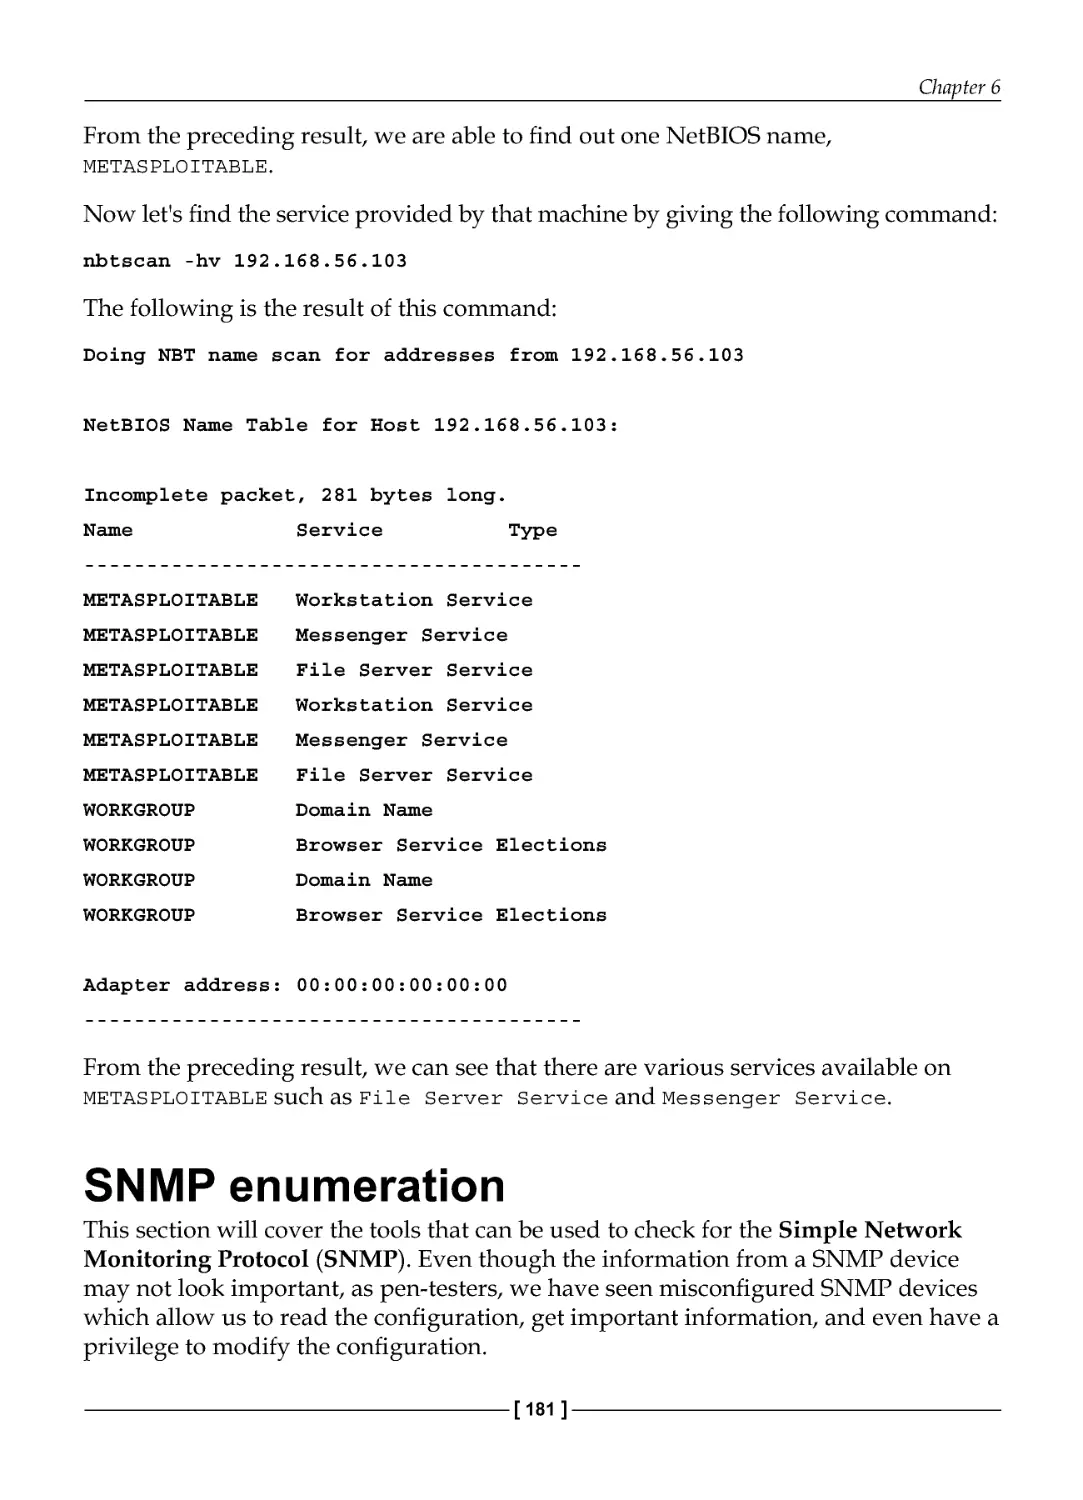 SNMP enumeration